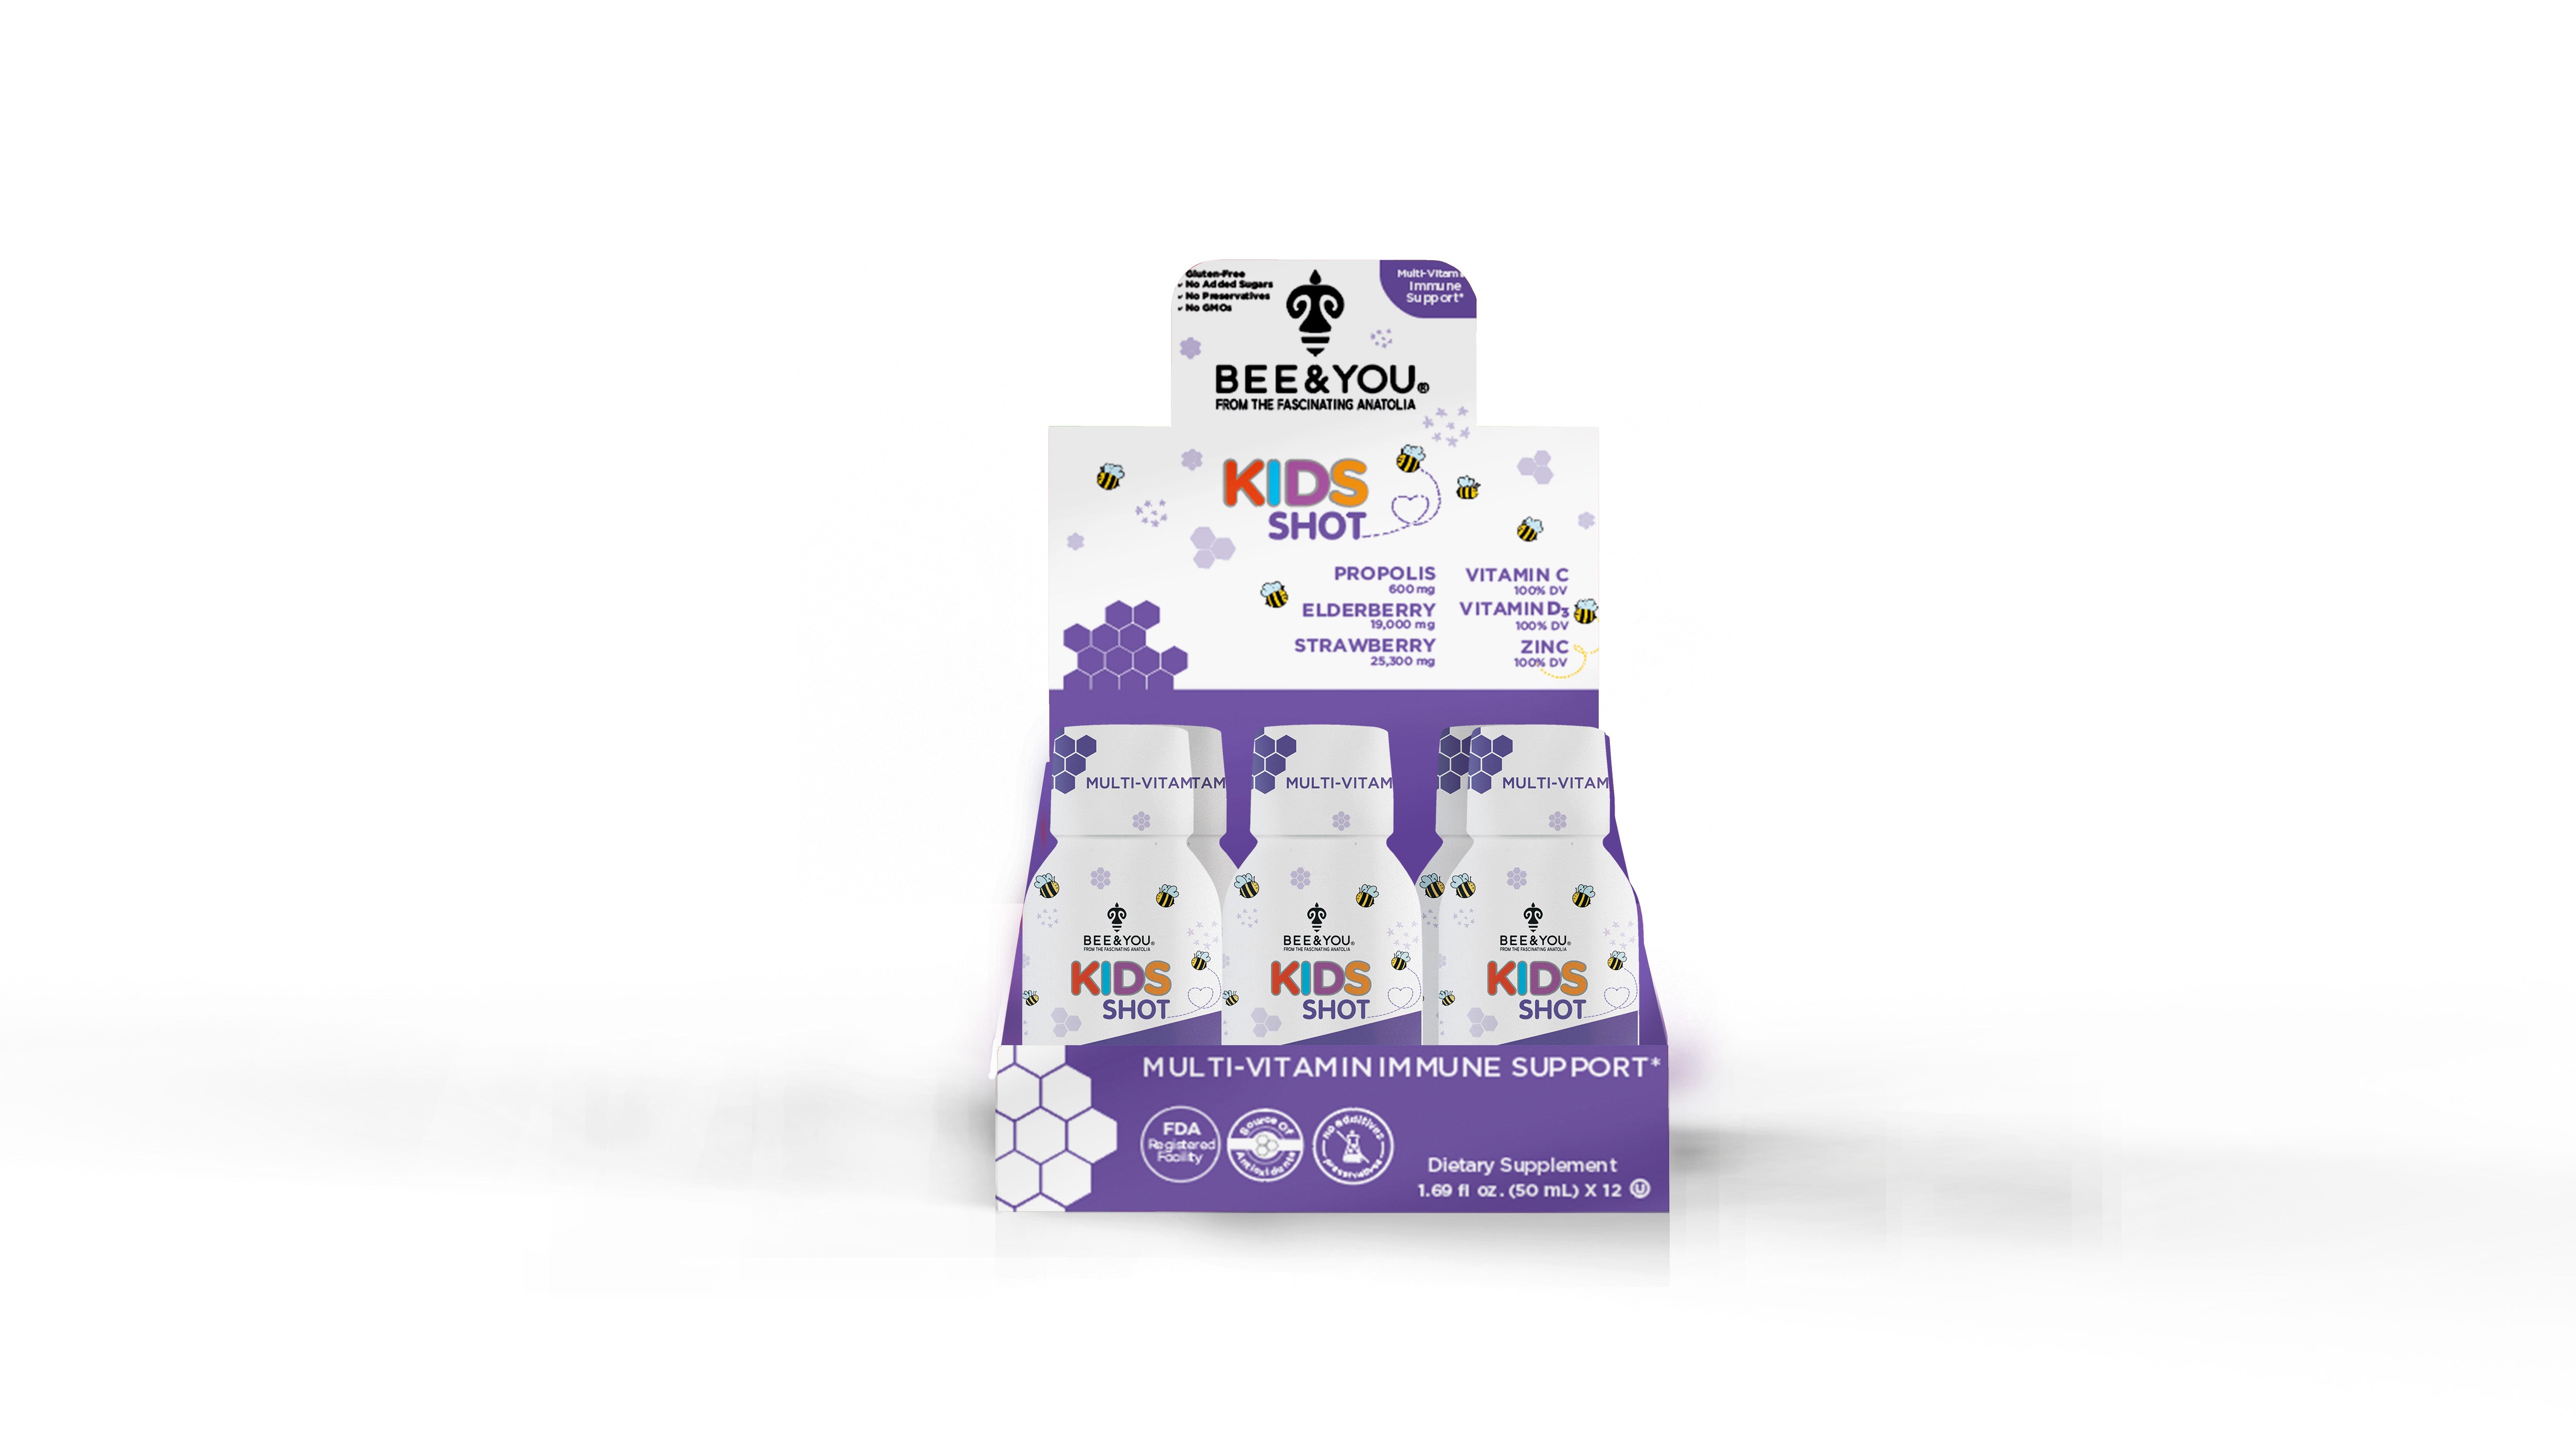 Elderberry Propolis Kids Set x12